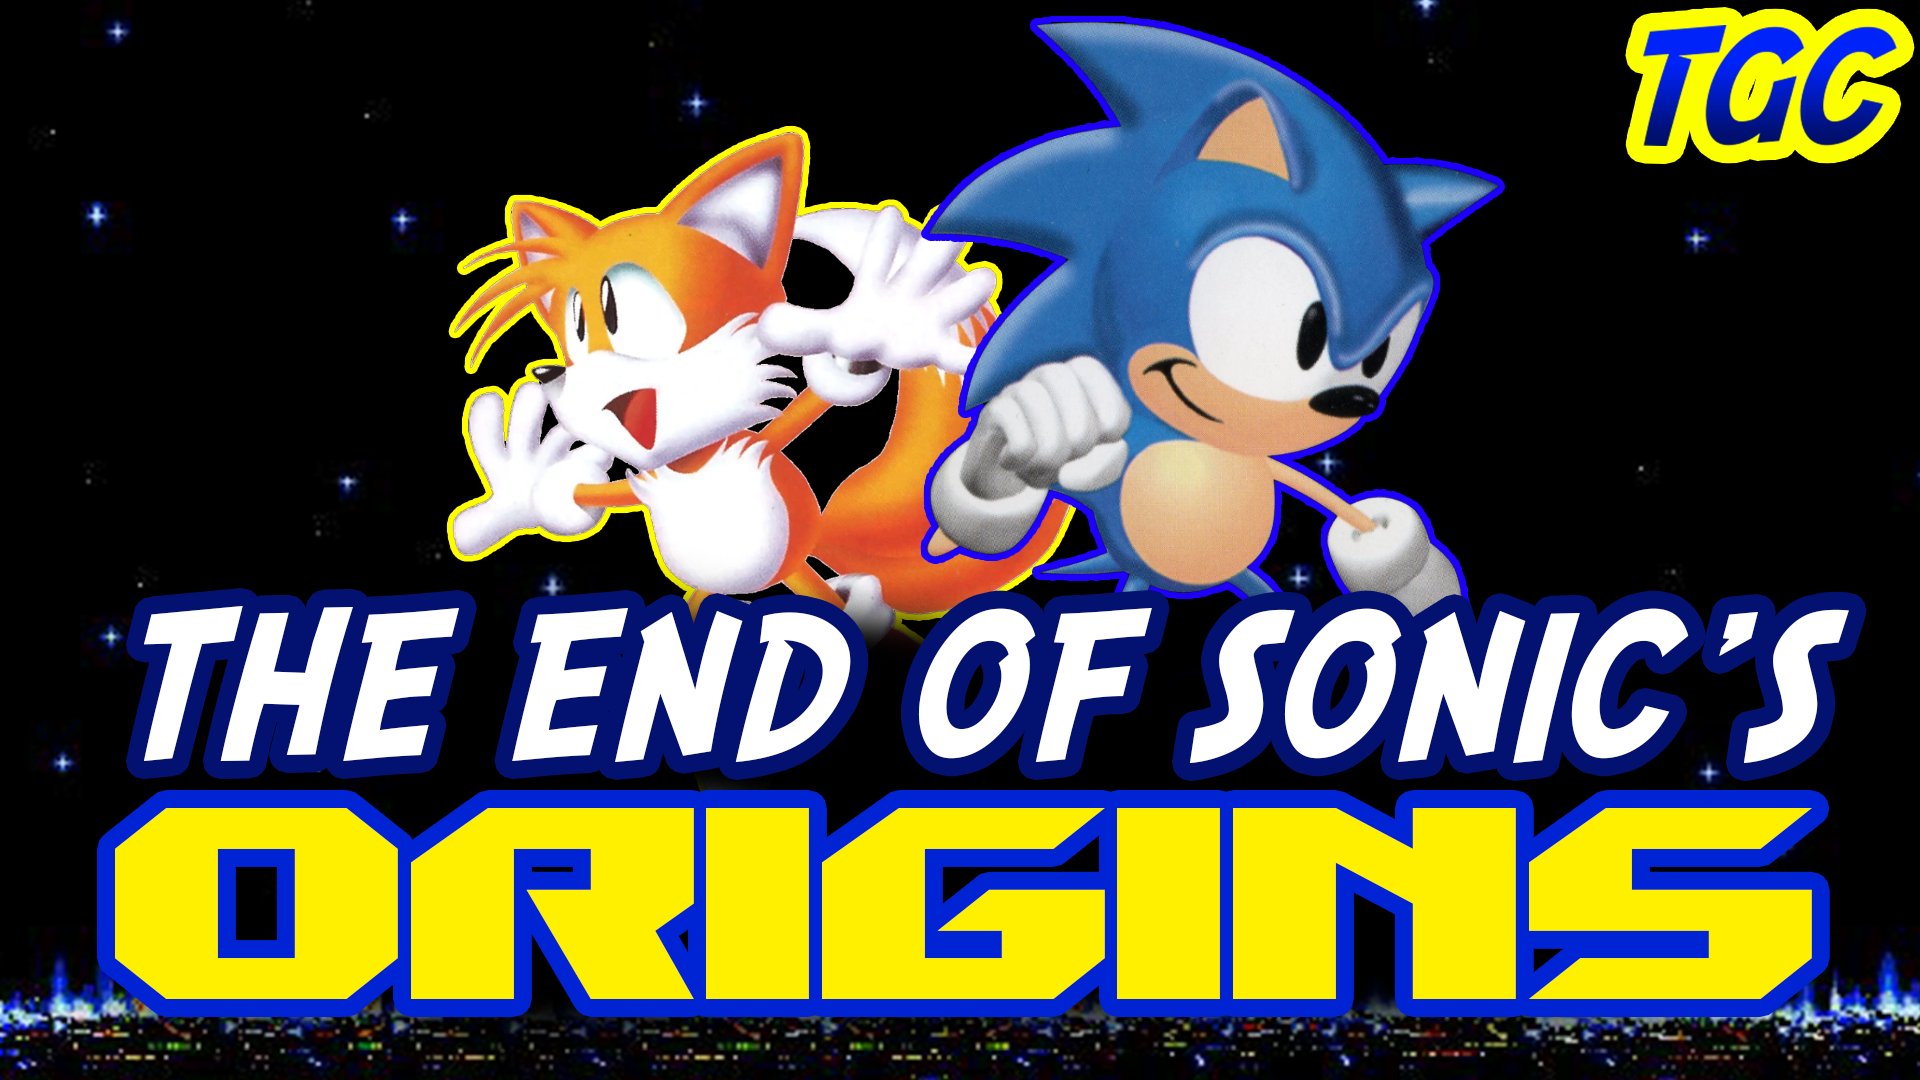 A Dark Version of Sonic 2 